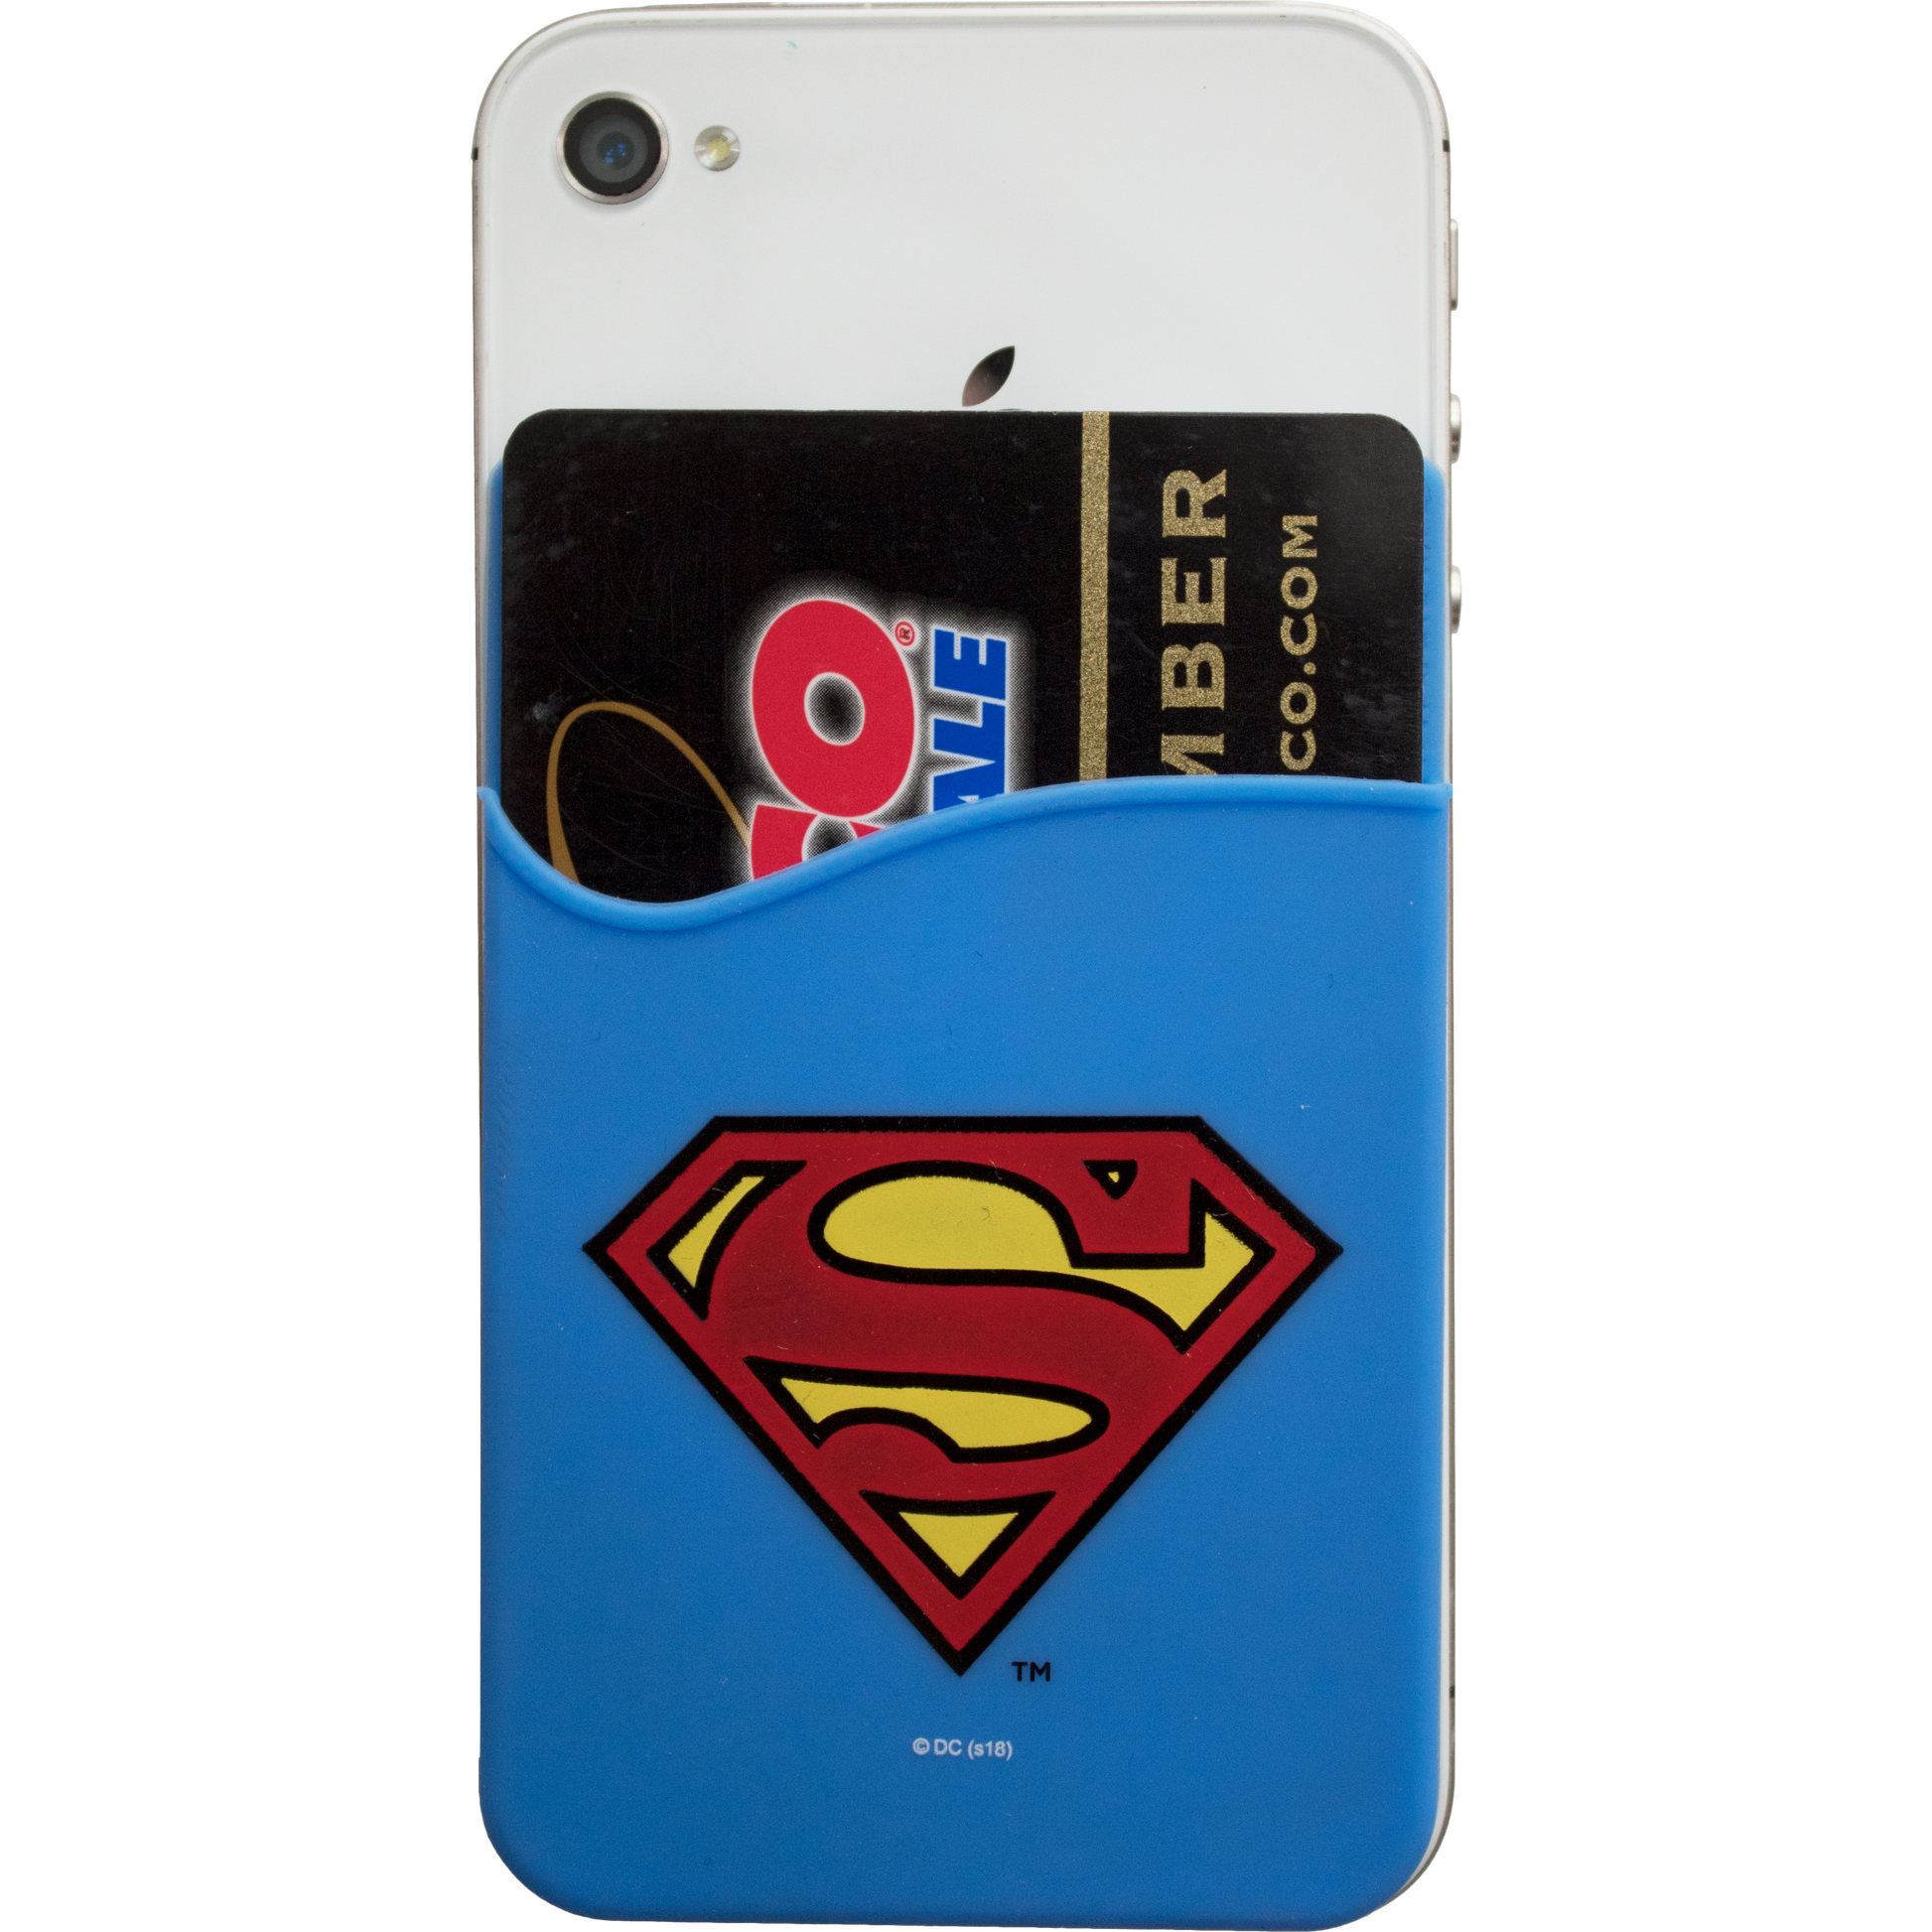 Superman Logo Smartphone Card Holder - Icon Heroes 